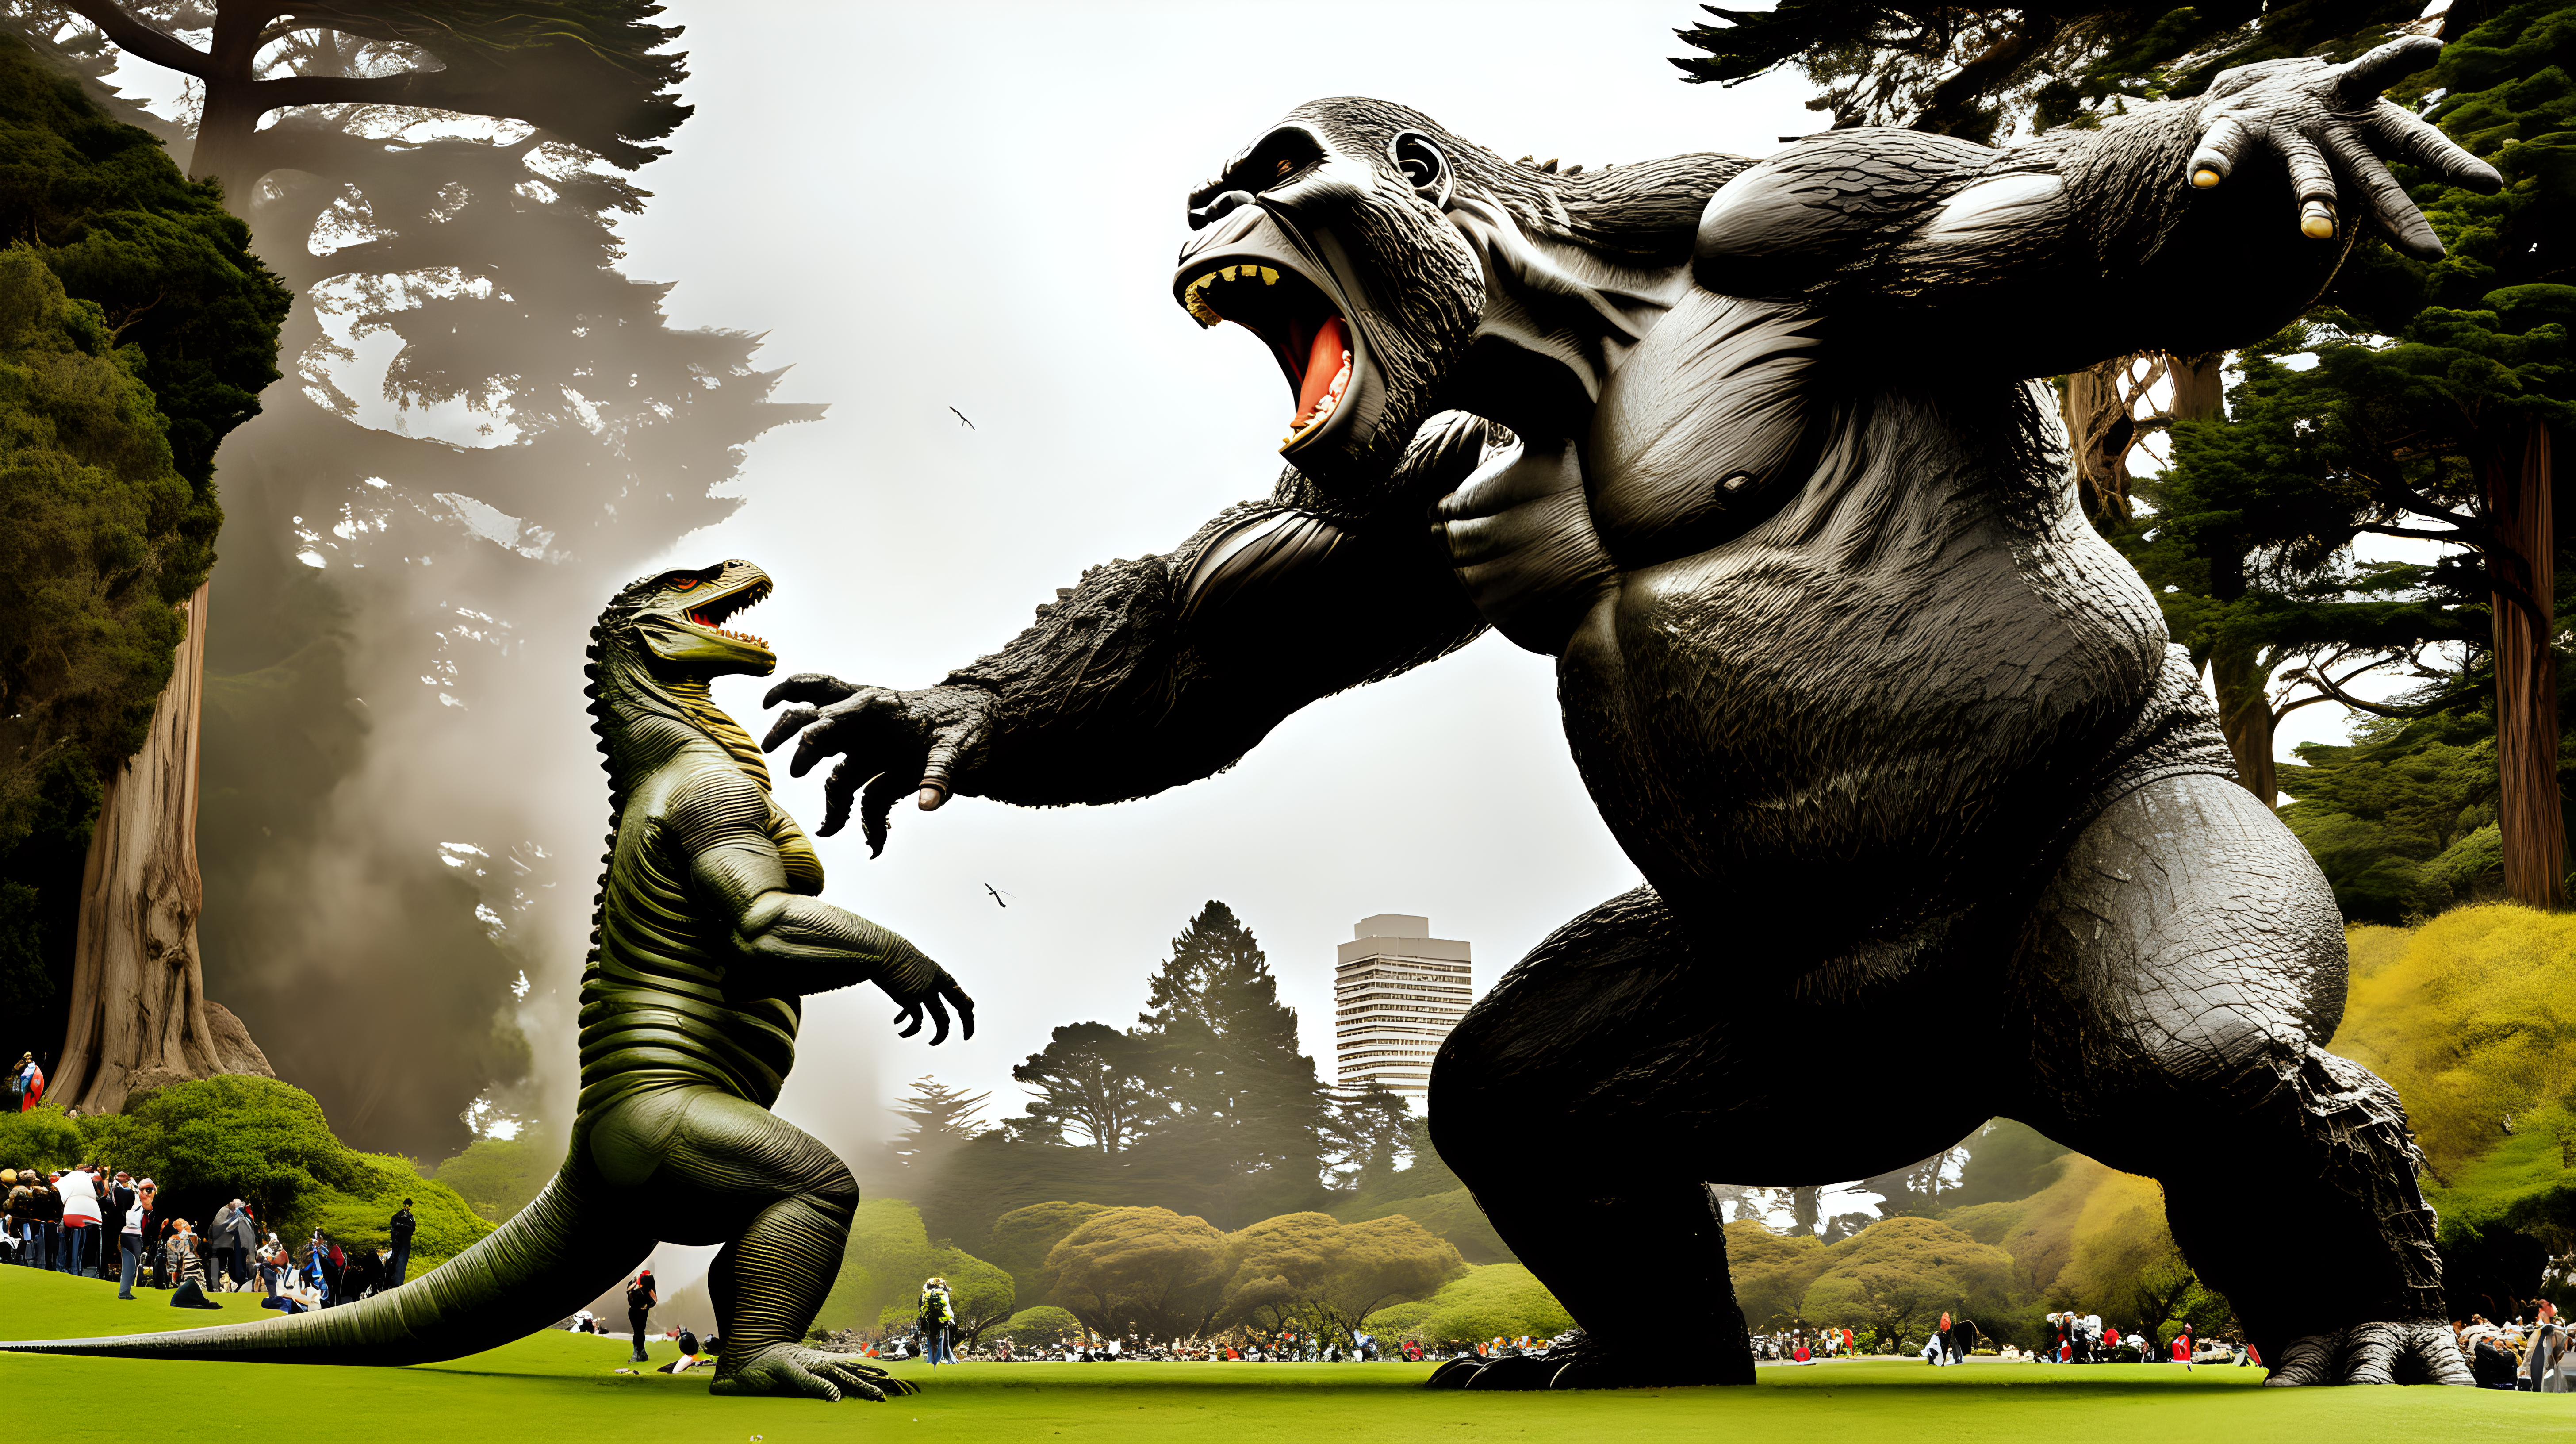 King Kong and Godzilla fighting a giant lizard